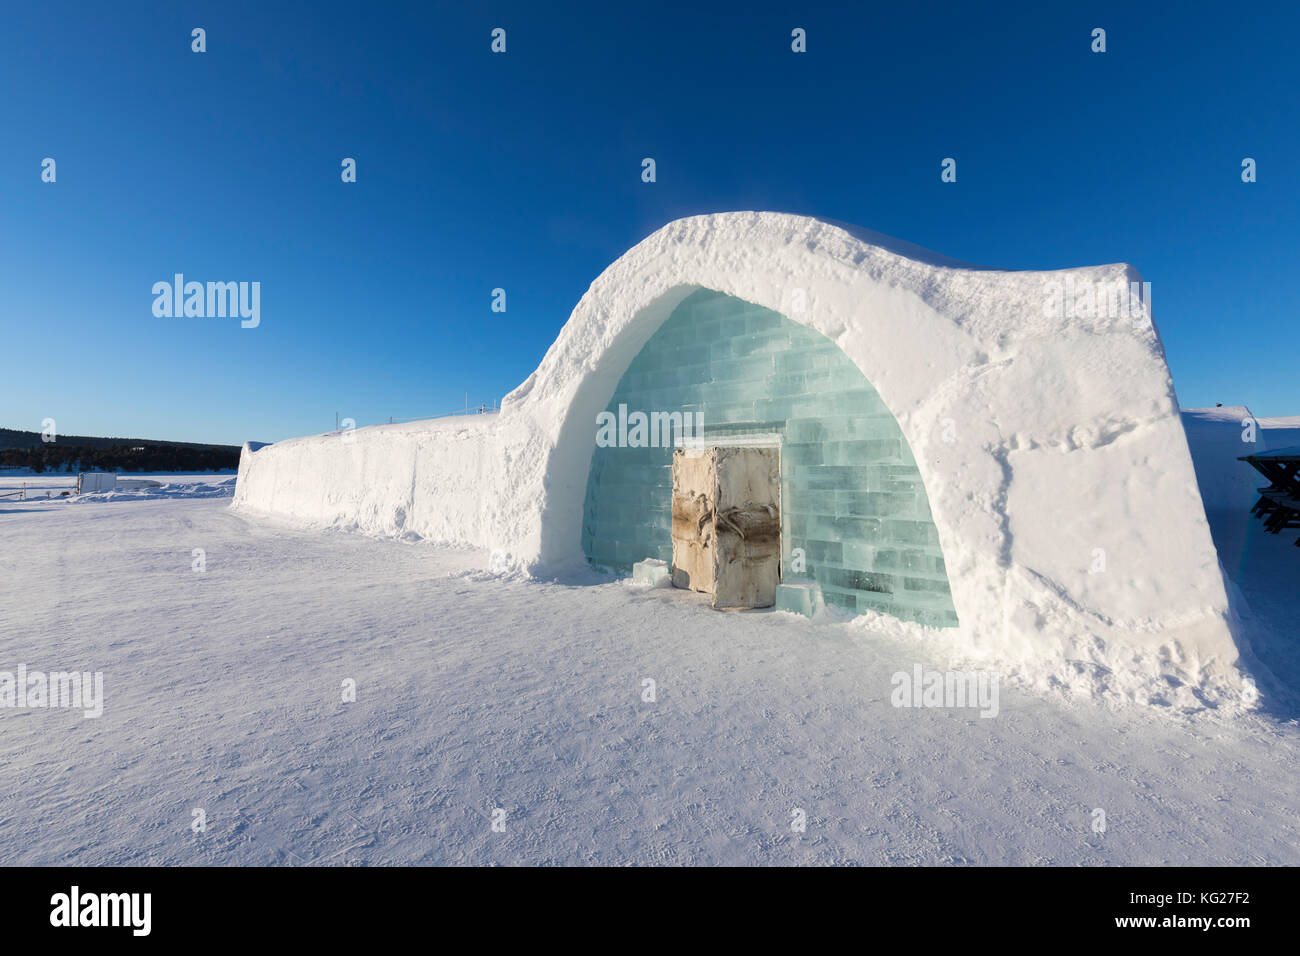 Ice building with igloo shape in the snow, Ice Hotel, Jukkasjarvi, Kiruna, Norrbotten County, Lapland, Sweden, Scandinavia, Europe Stock Photo